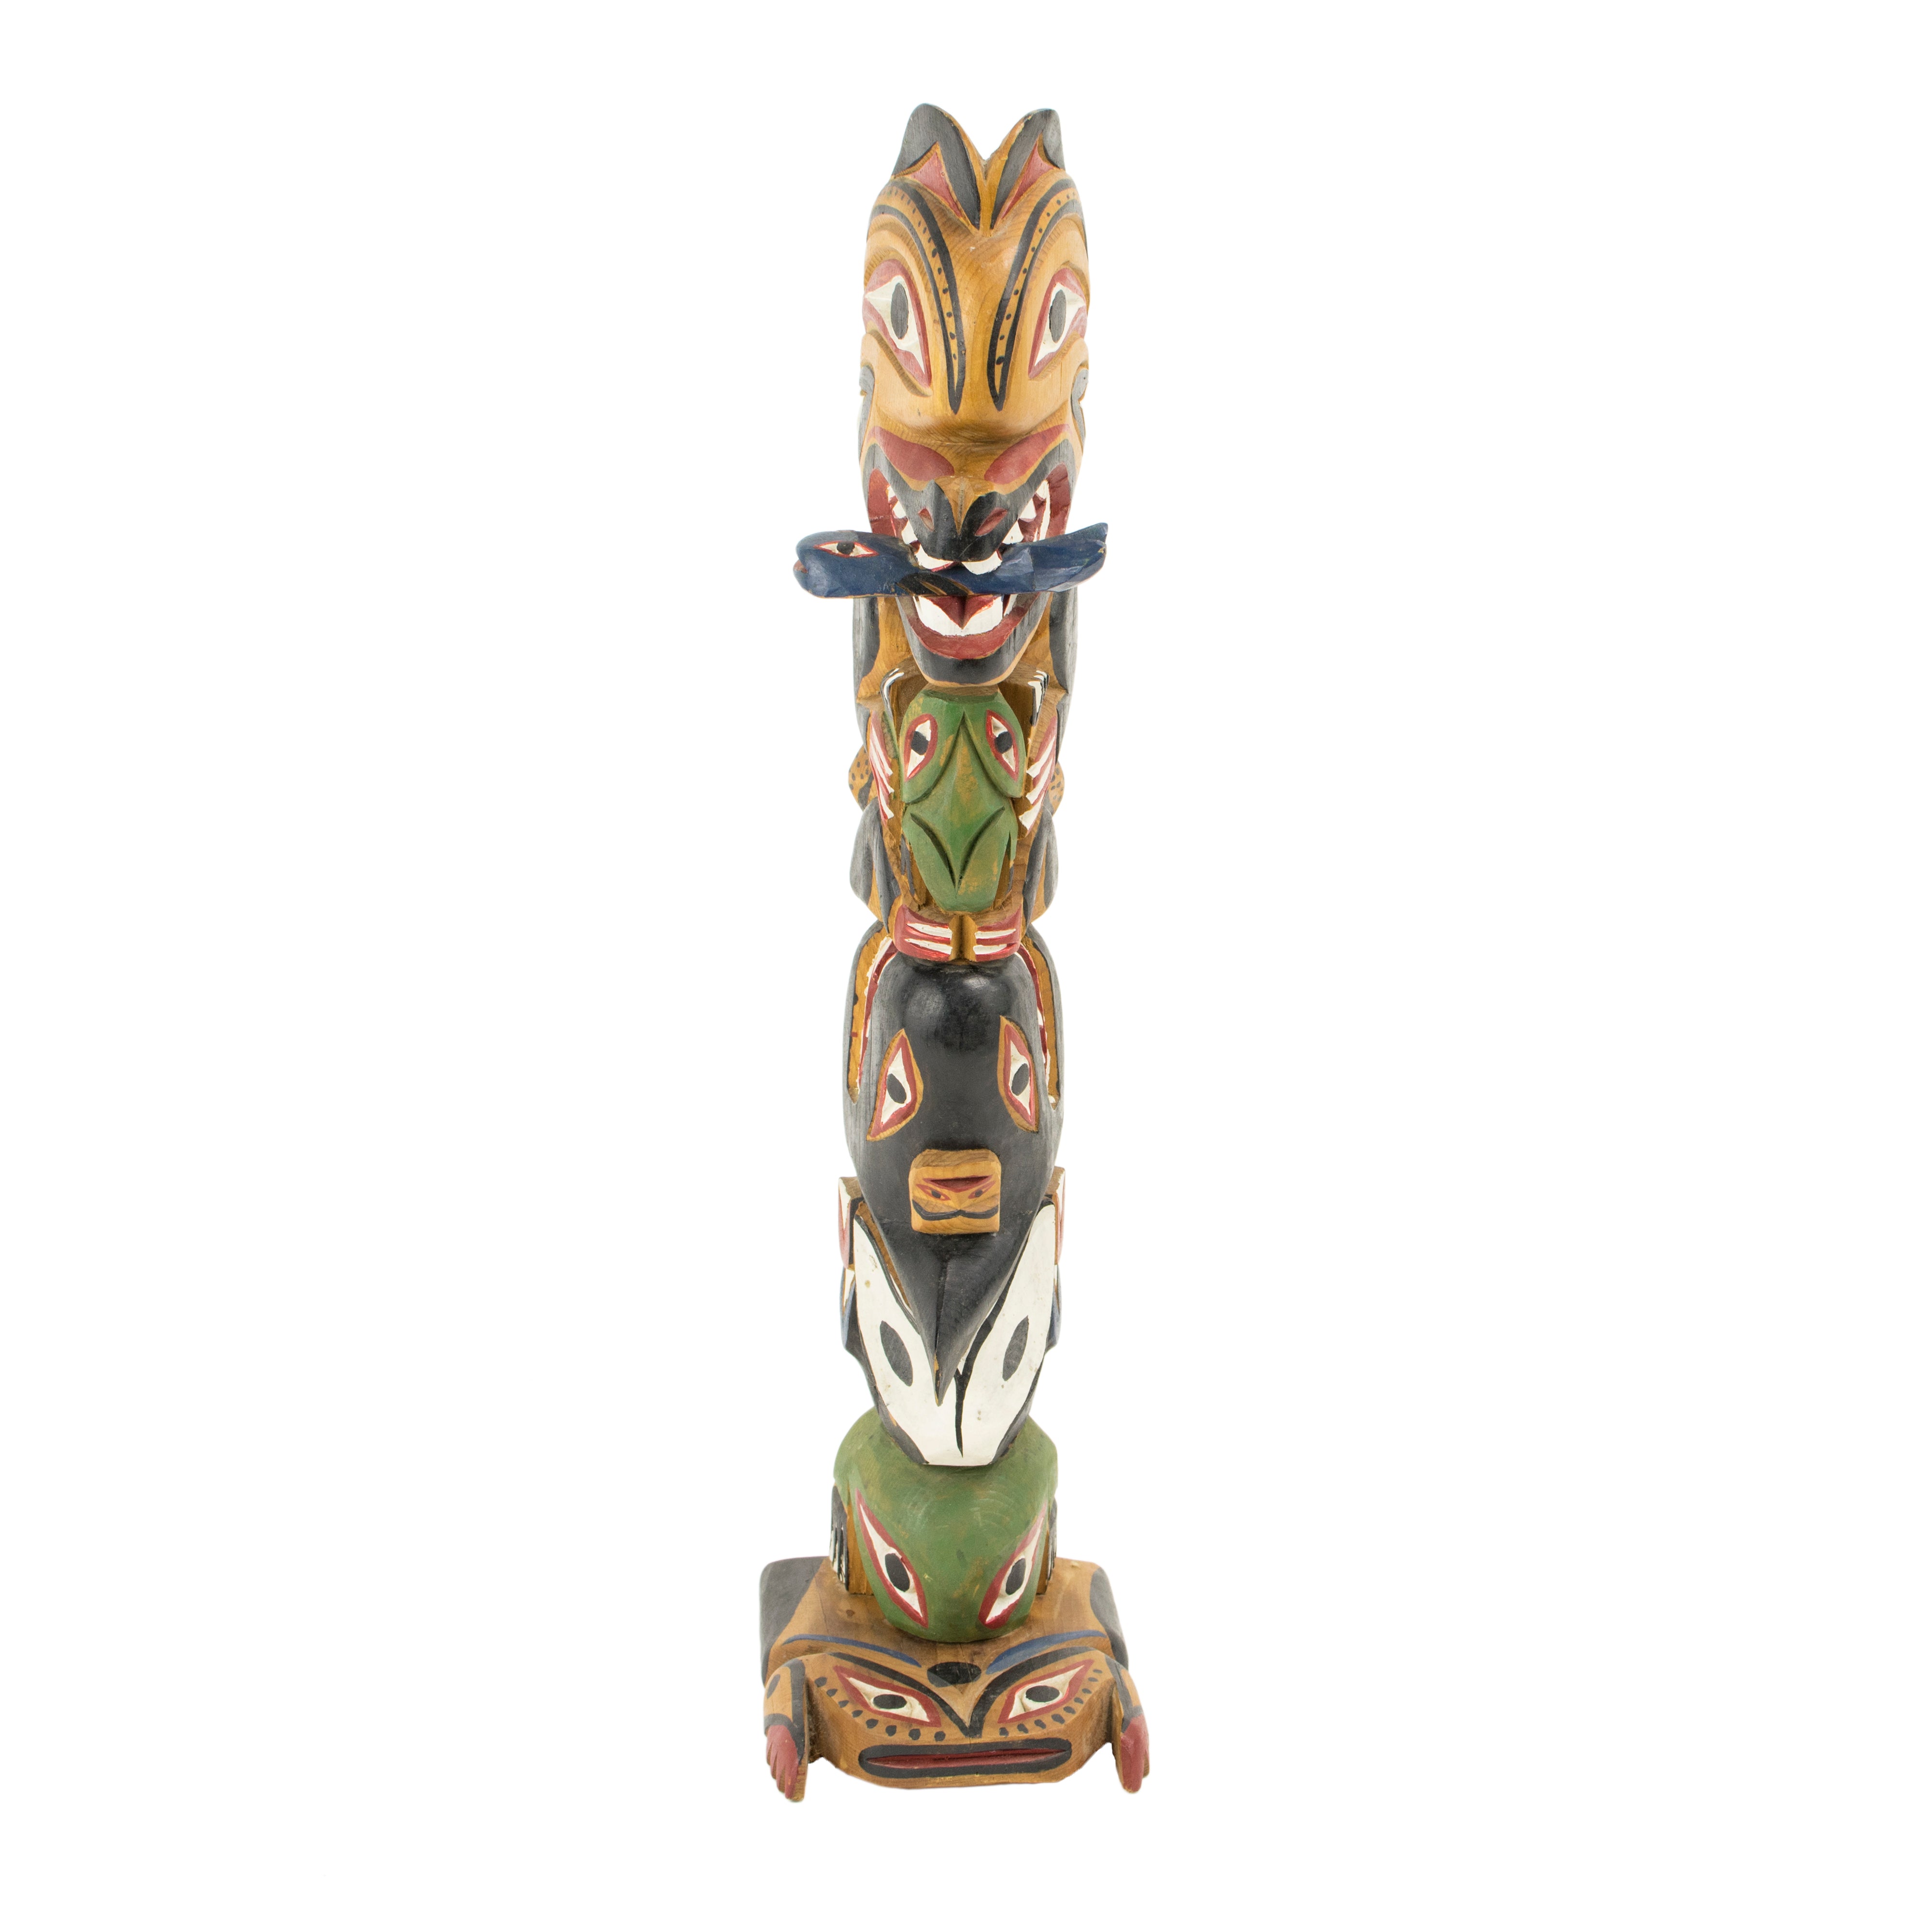 Ditidaht/Nuu-chah-nulth Totem, Native, Carving, Totem Pole